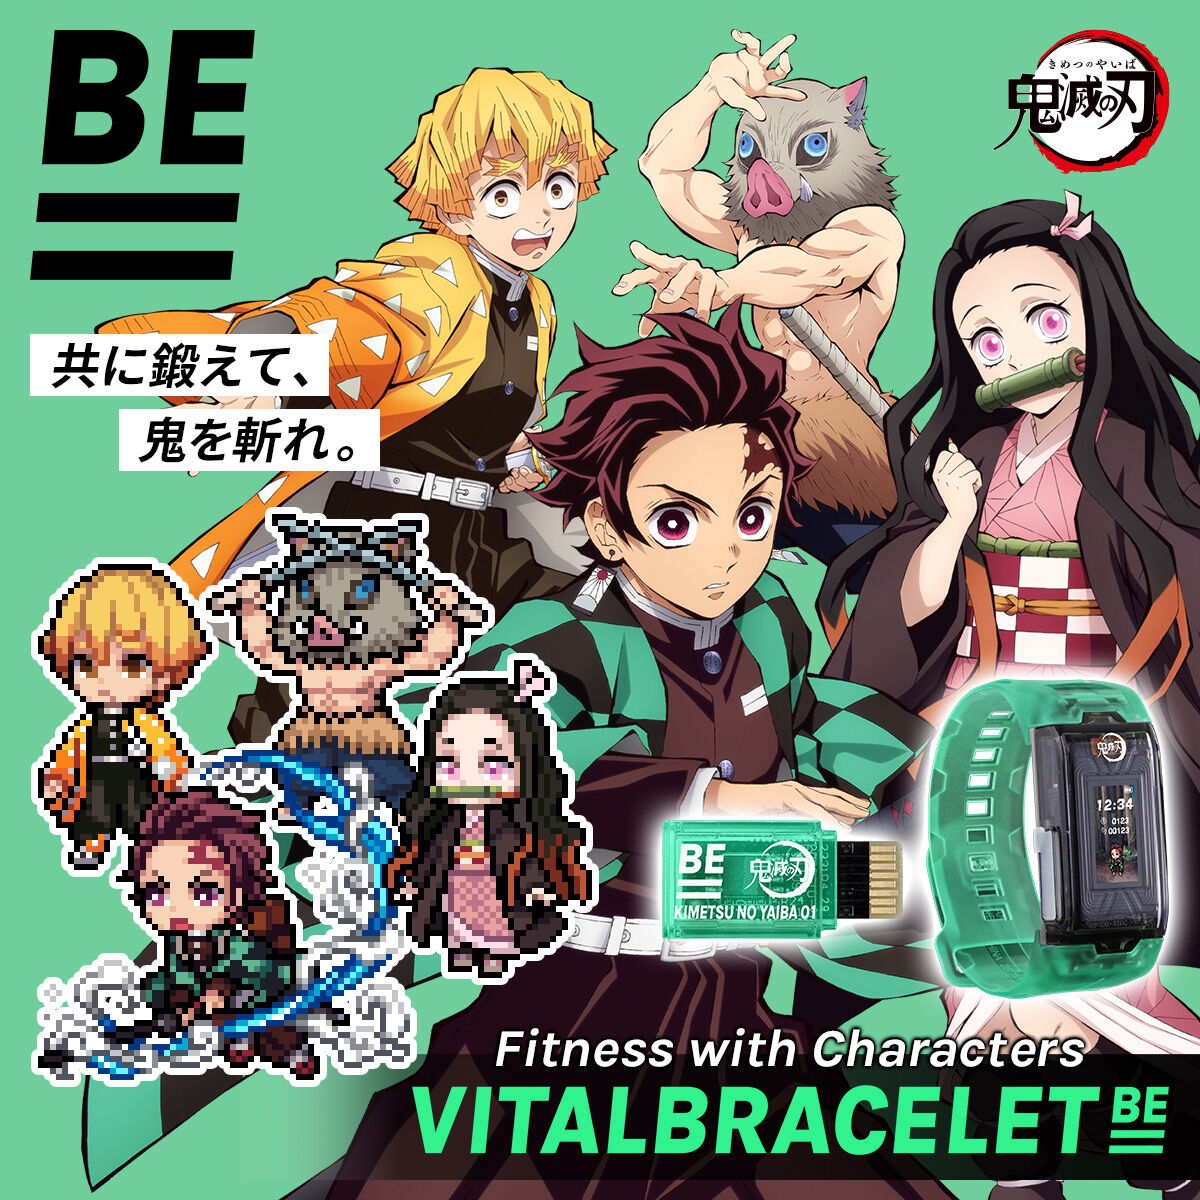 VITAL BRACELET BE 逃走中 Special setバイタルブレス 【福袋セール